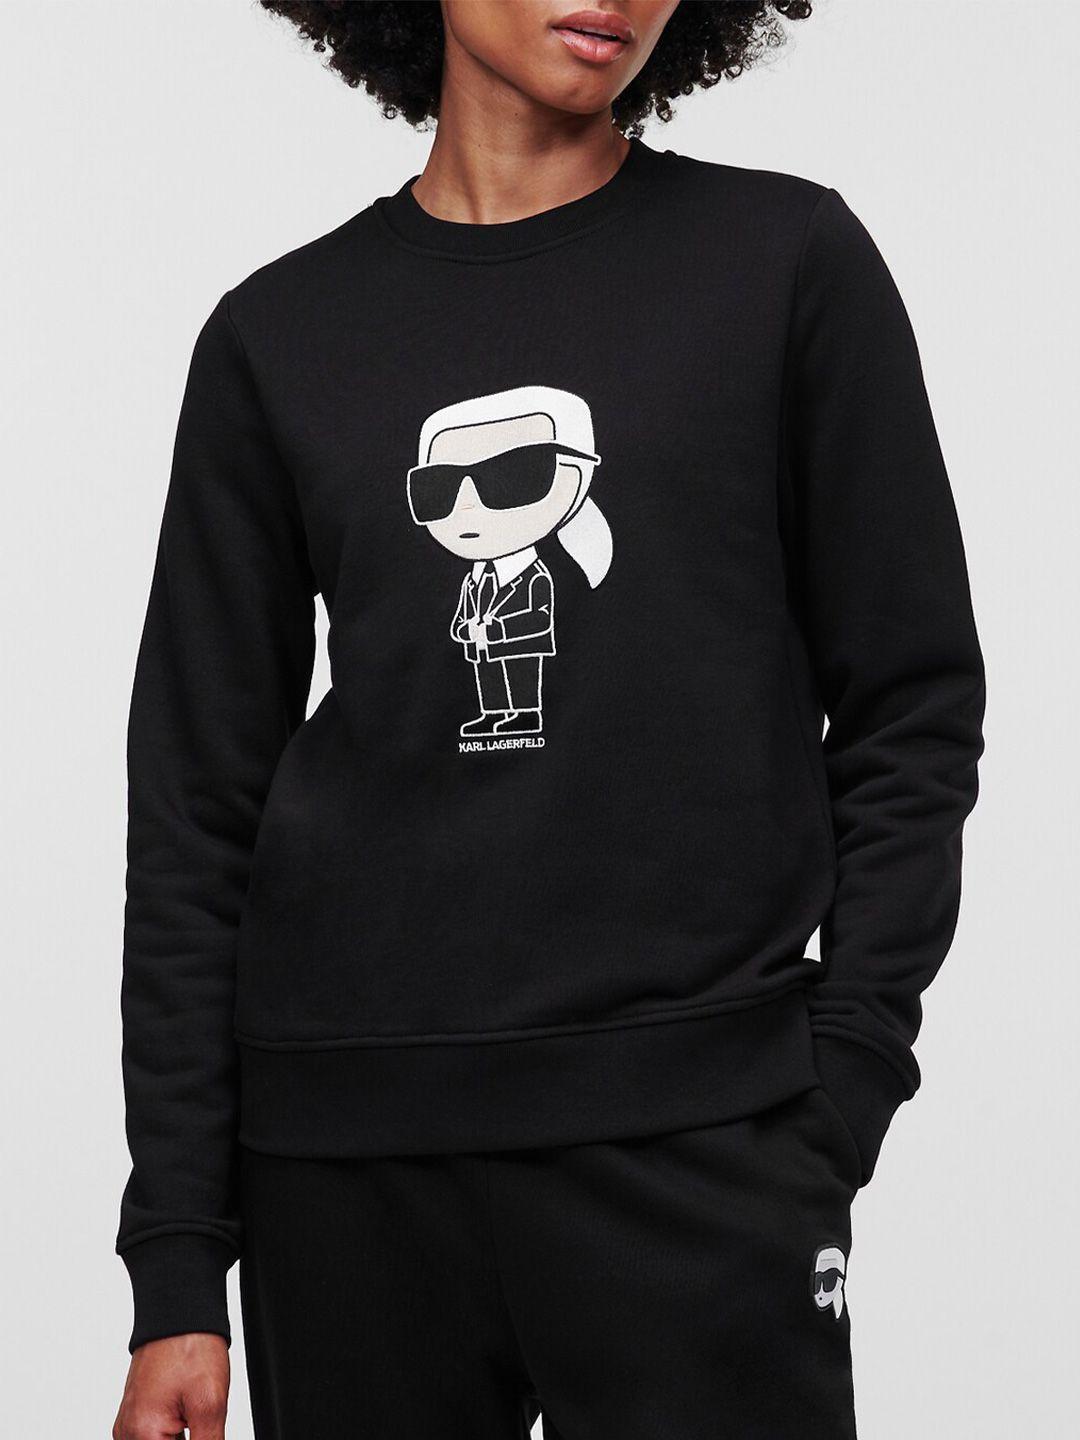 karl lagerfeld graphic printed pullover cotton sweatshirt